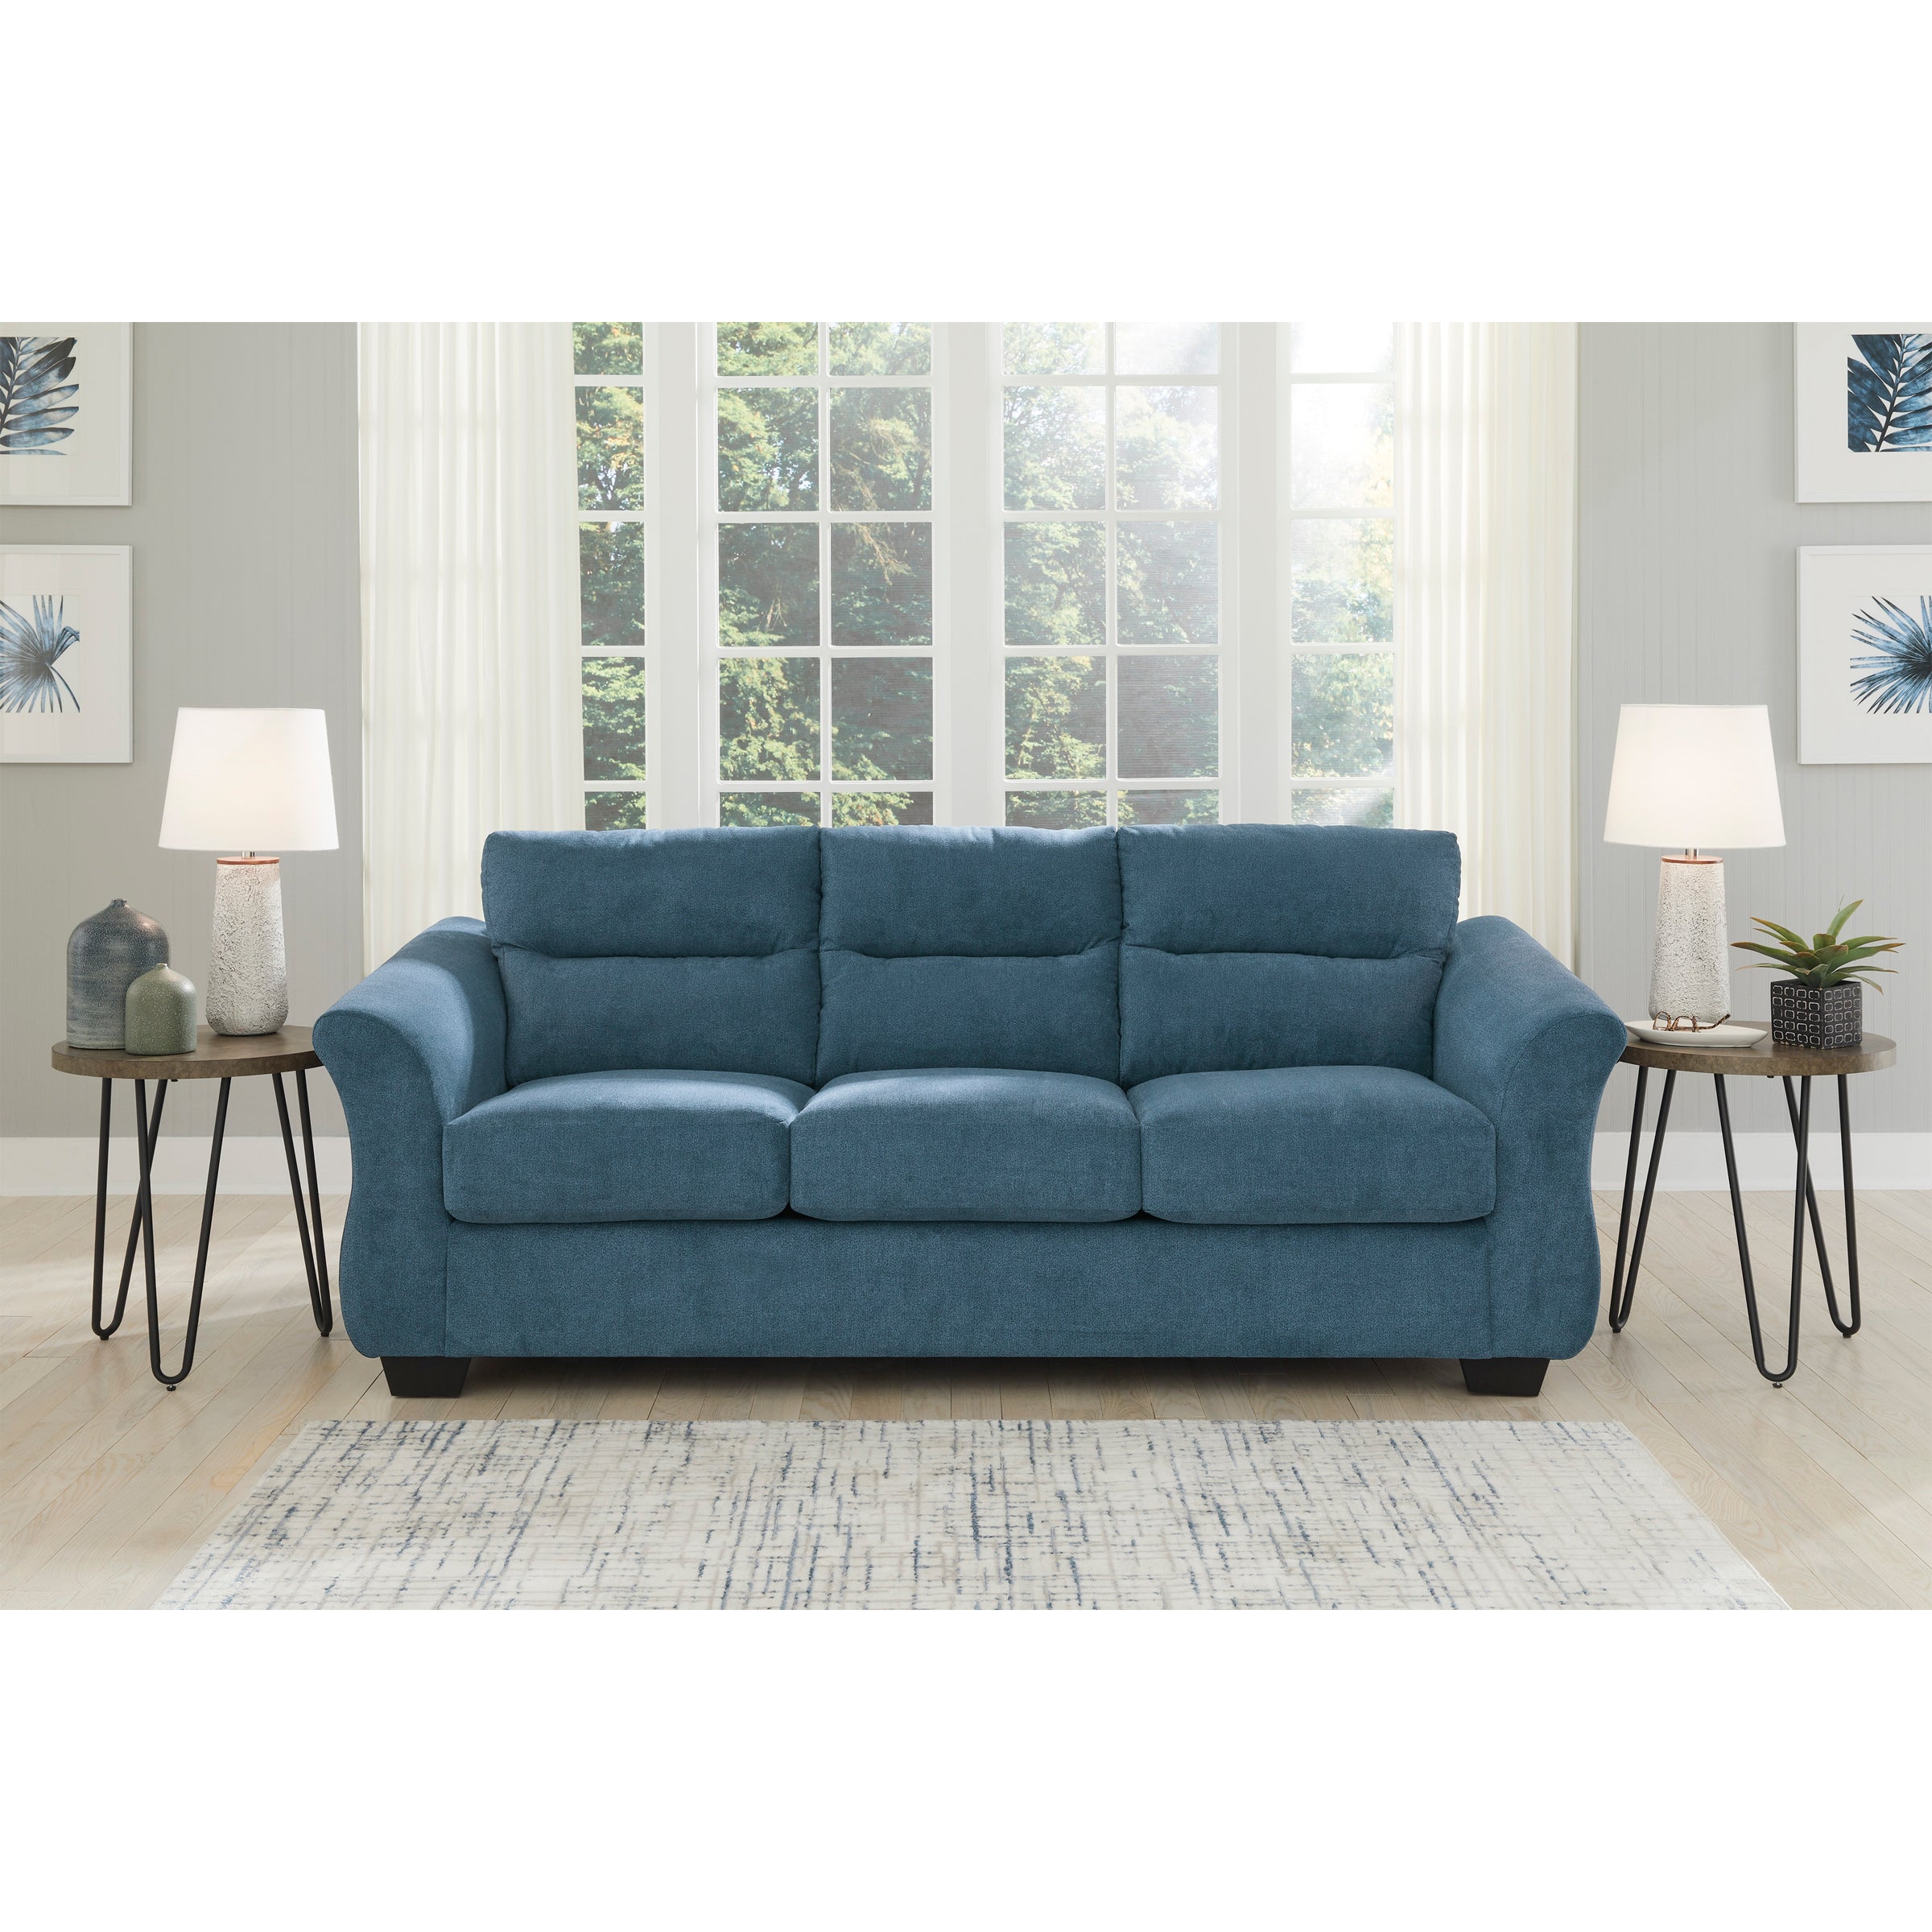 Miravel Sofa in Indigo Color